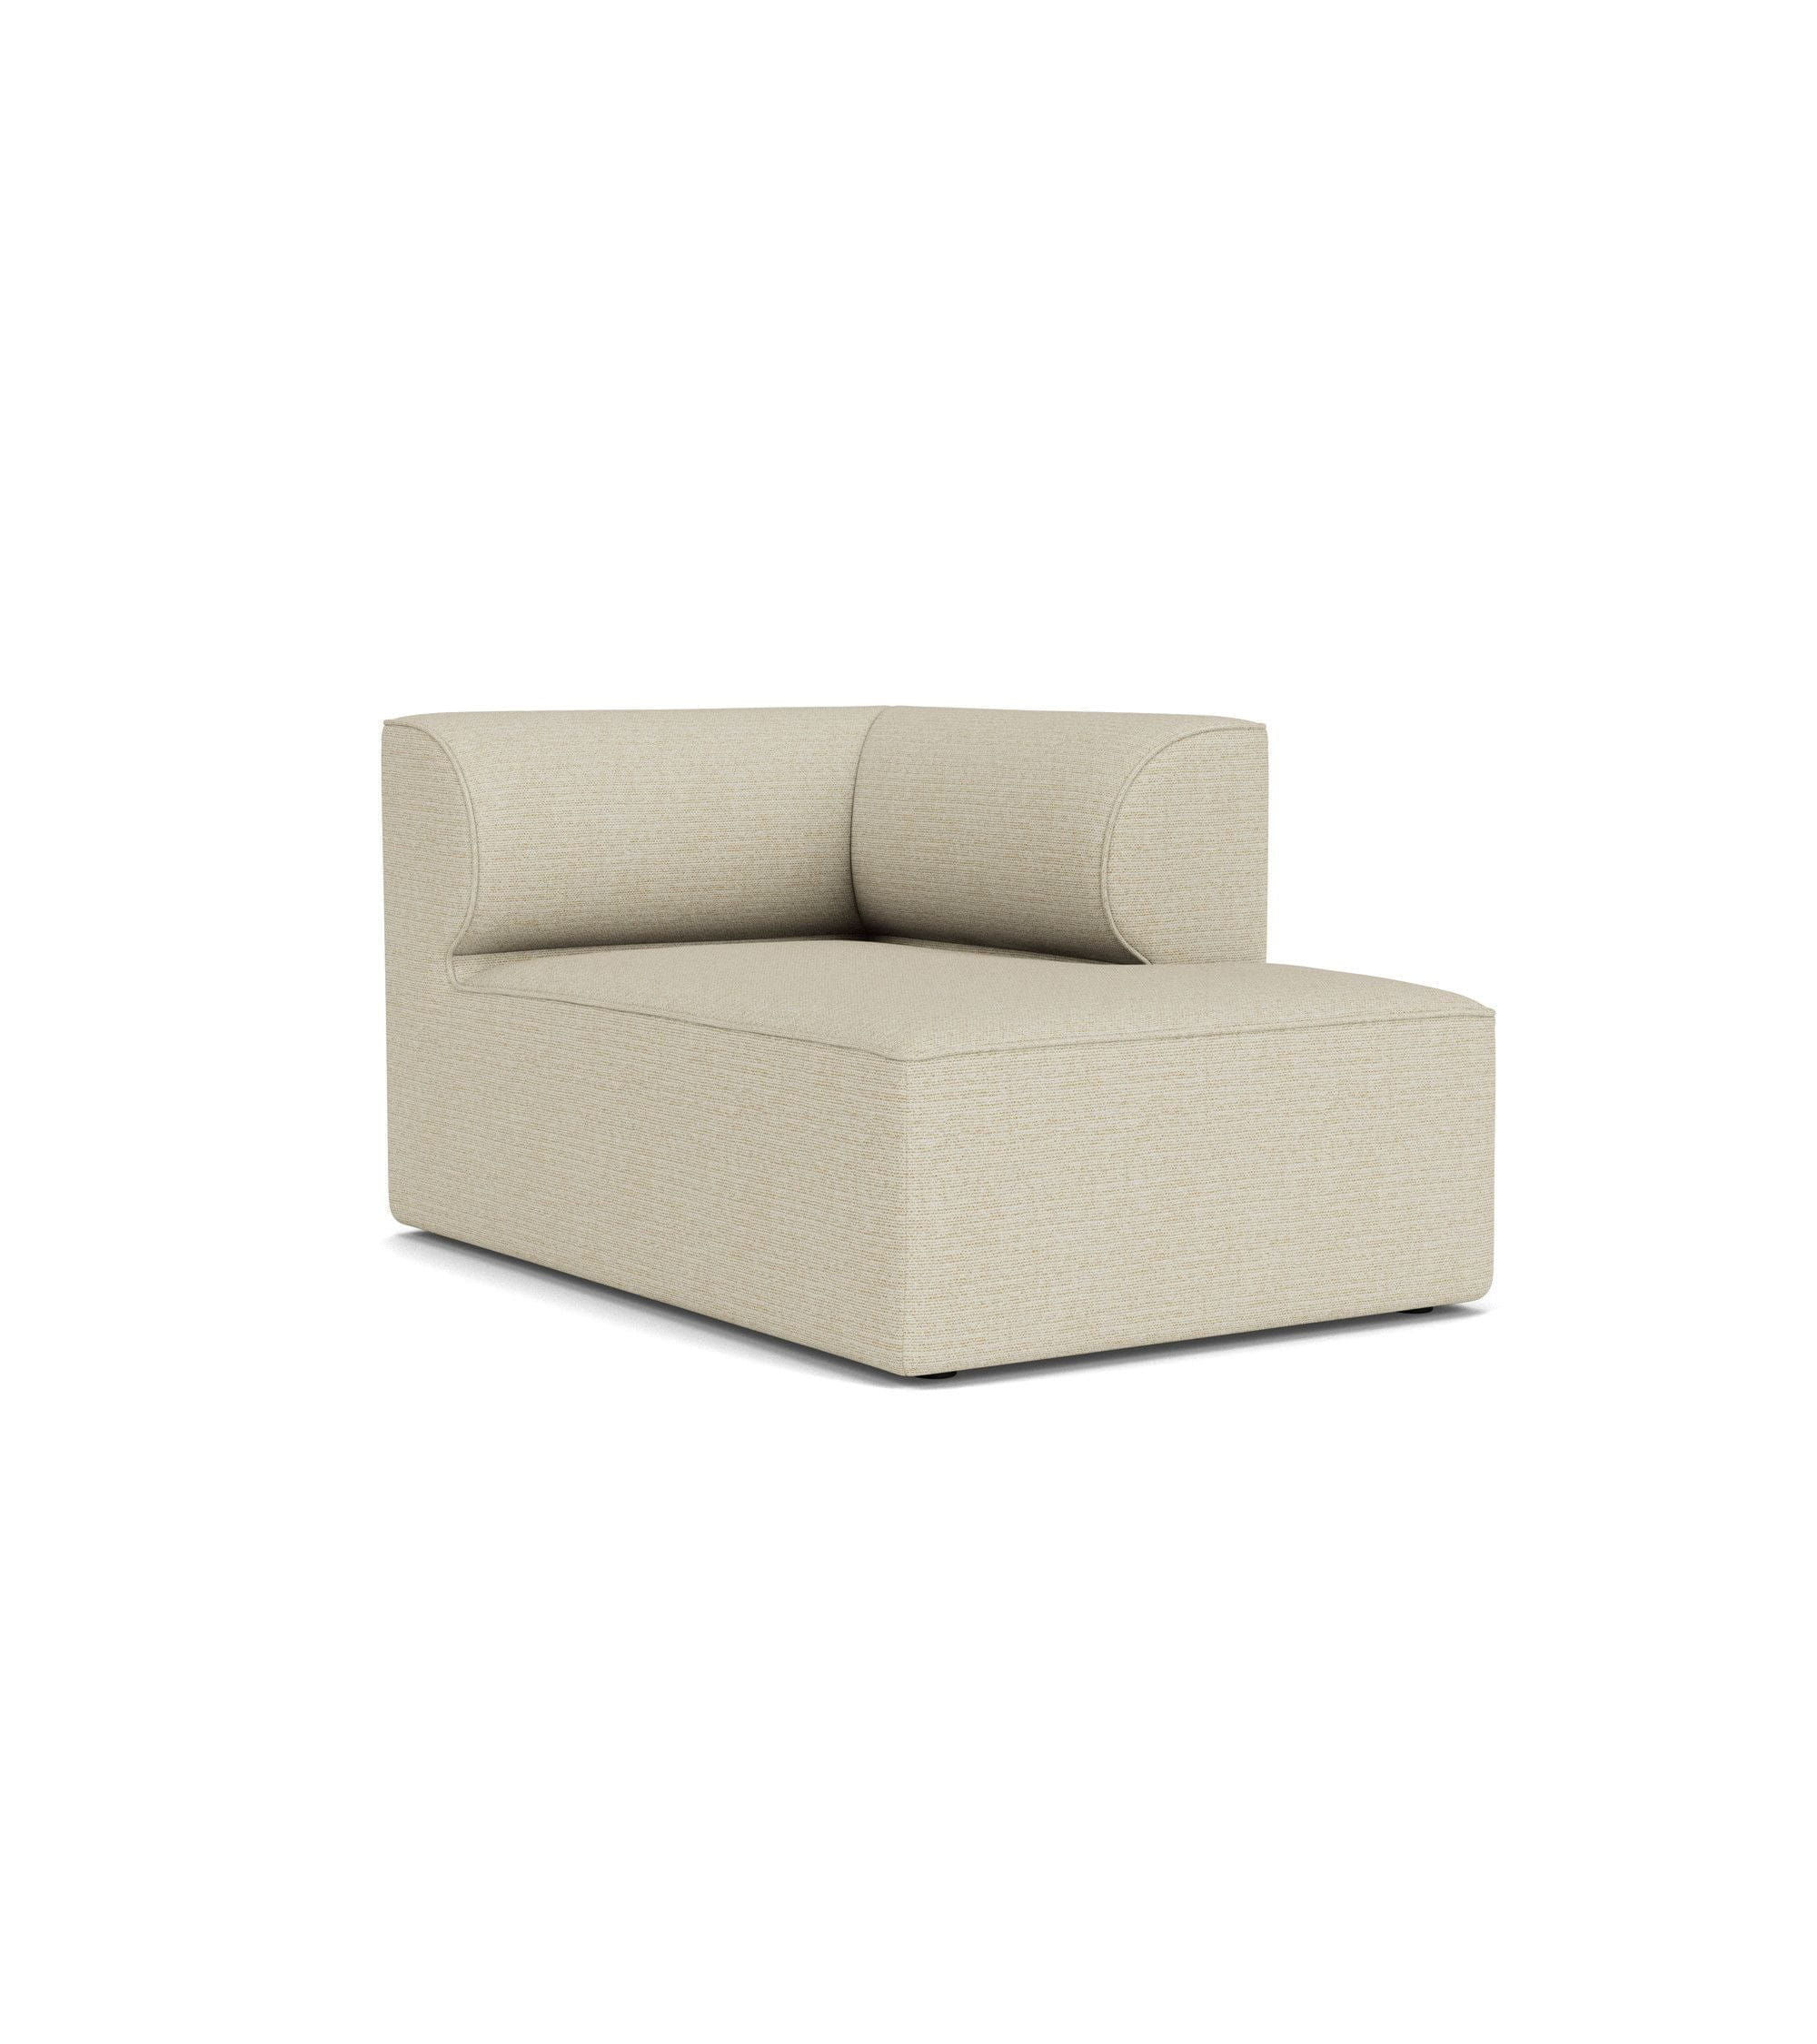 Audo Copenhagen Eaave modular sofá chaise chaise longue 86x129 cm a la derecha, sabana blanca